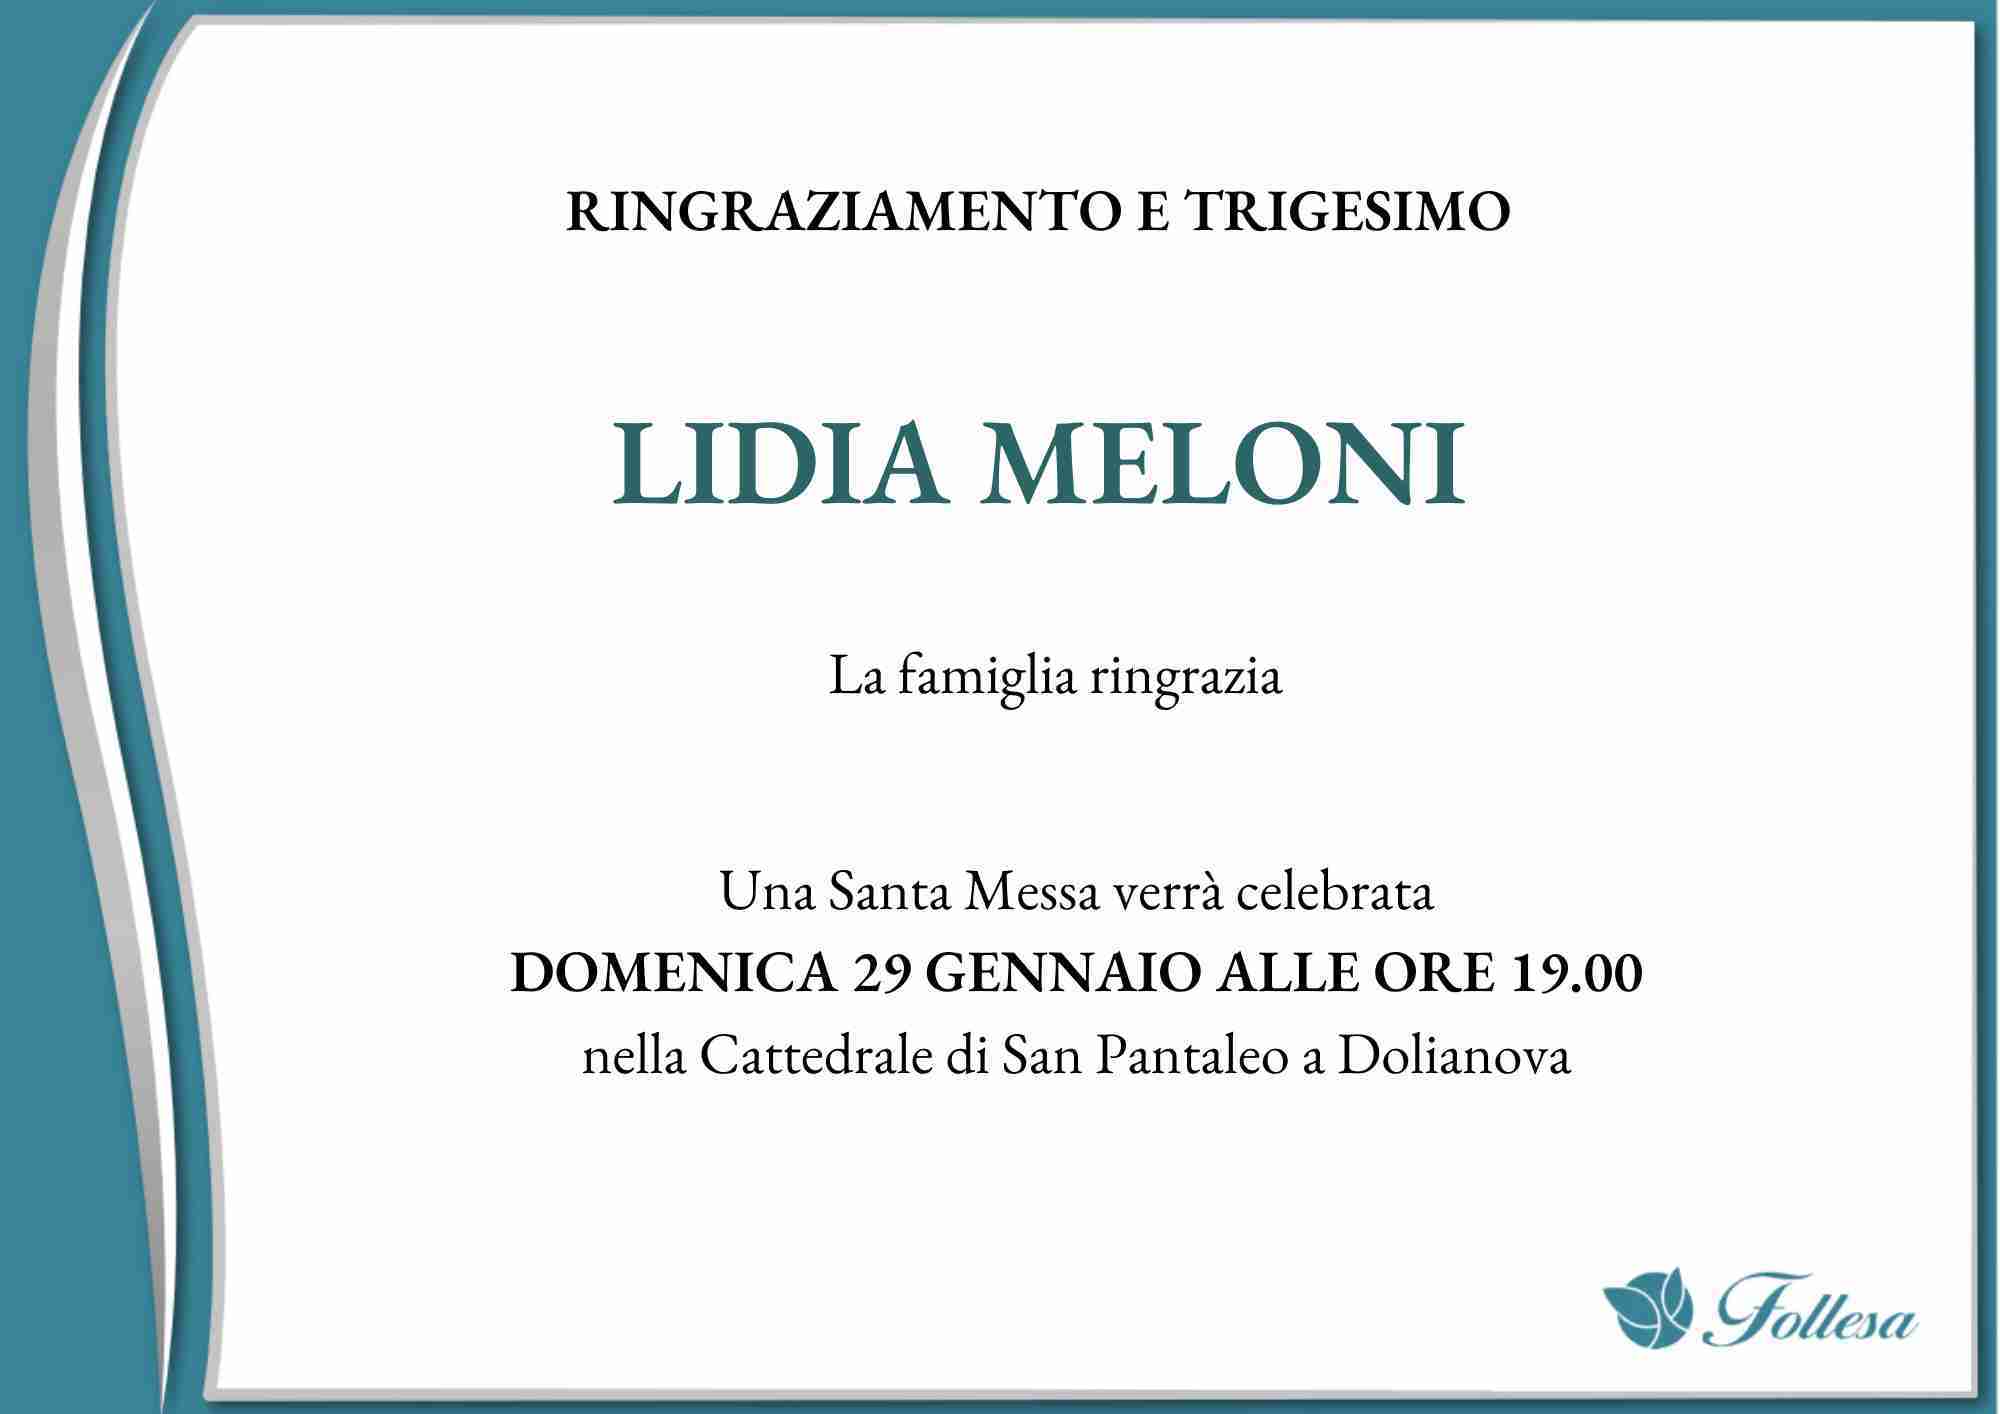 Lidia Meloni